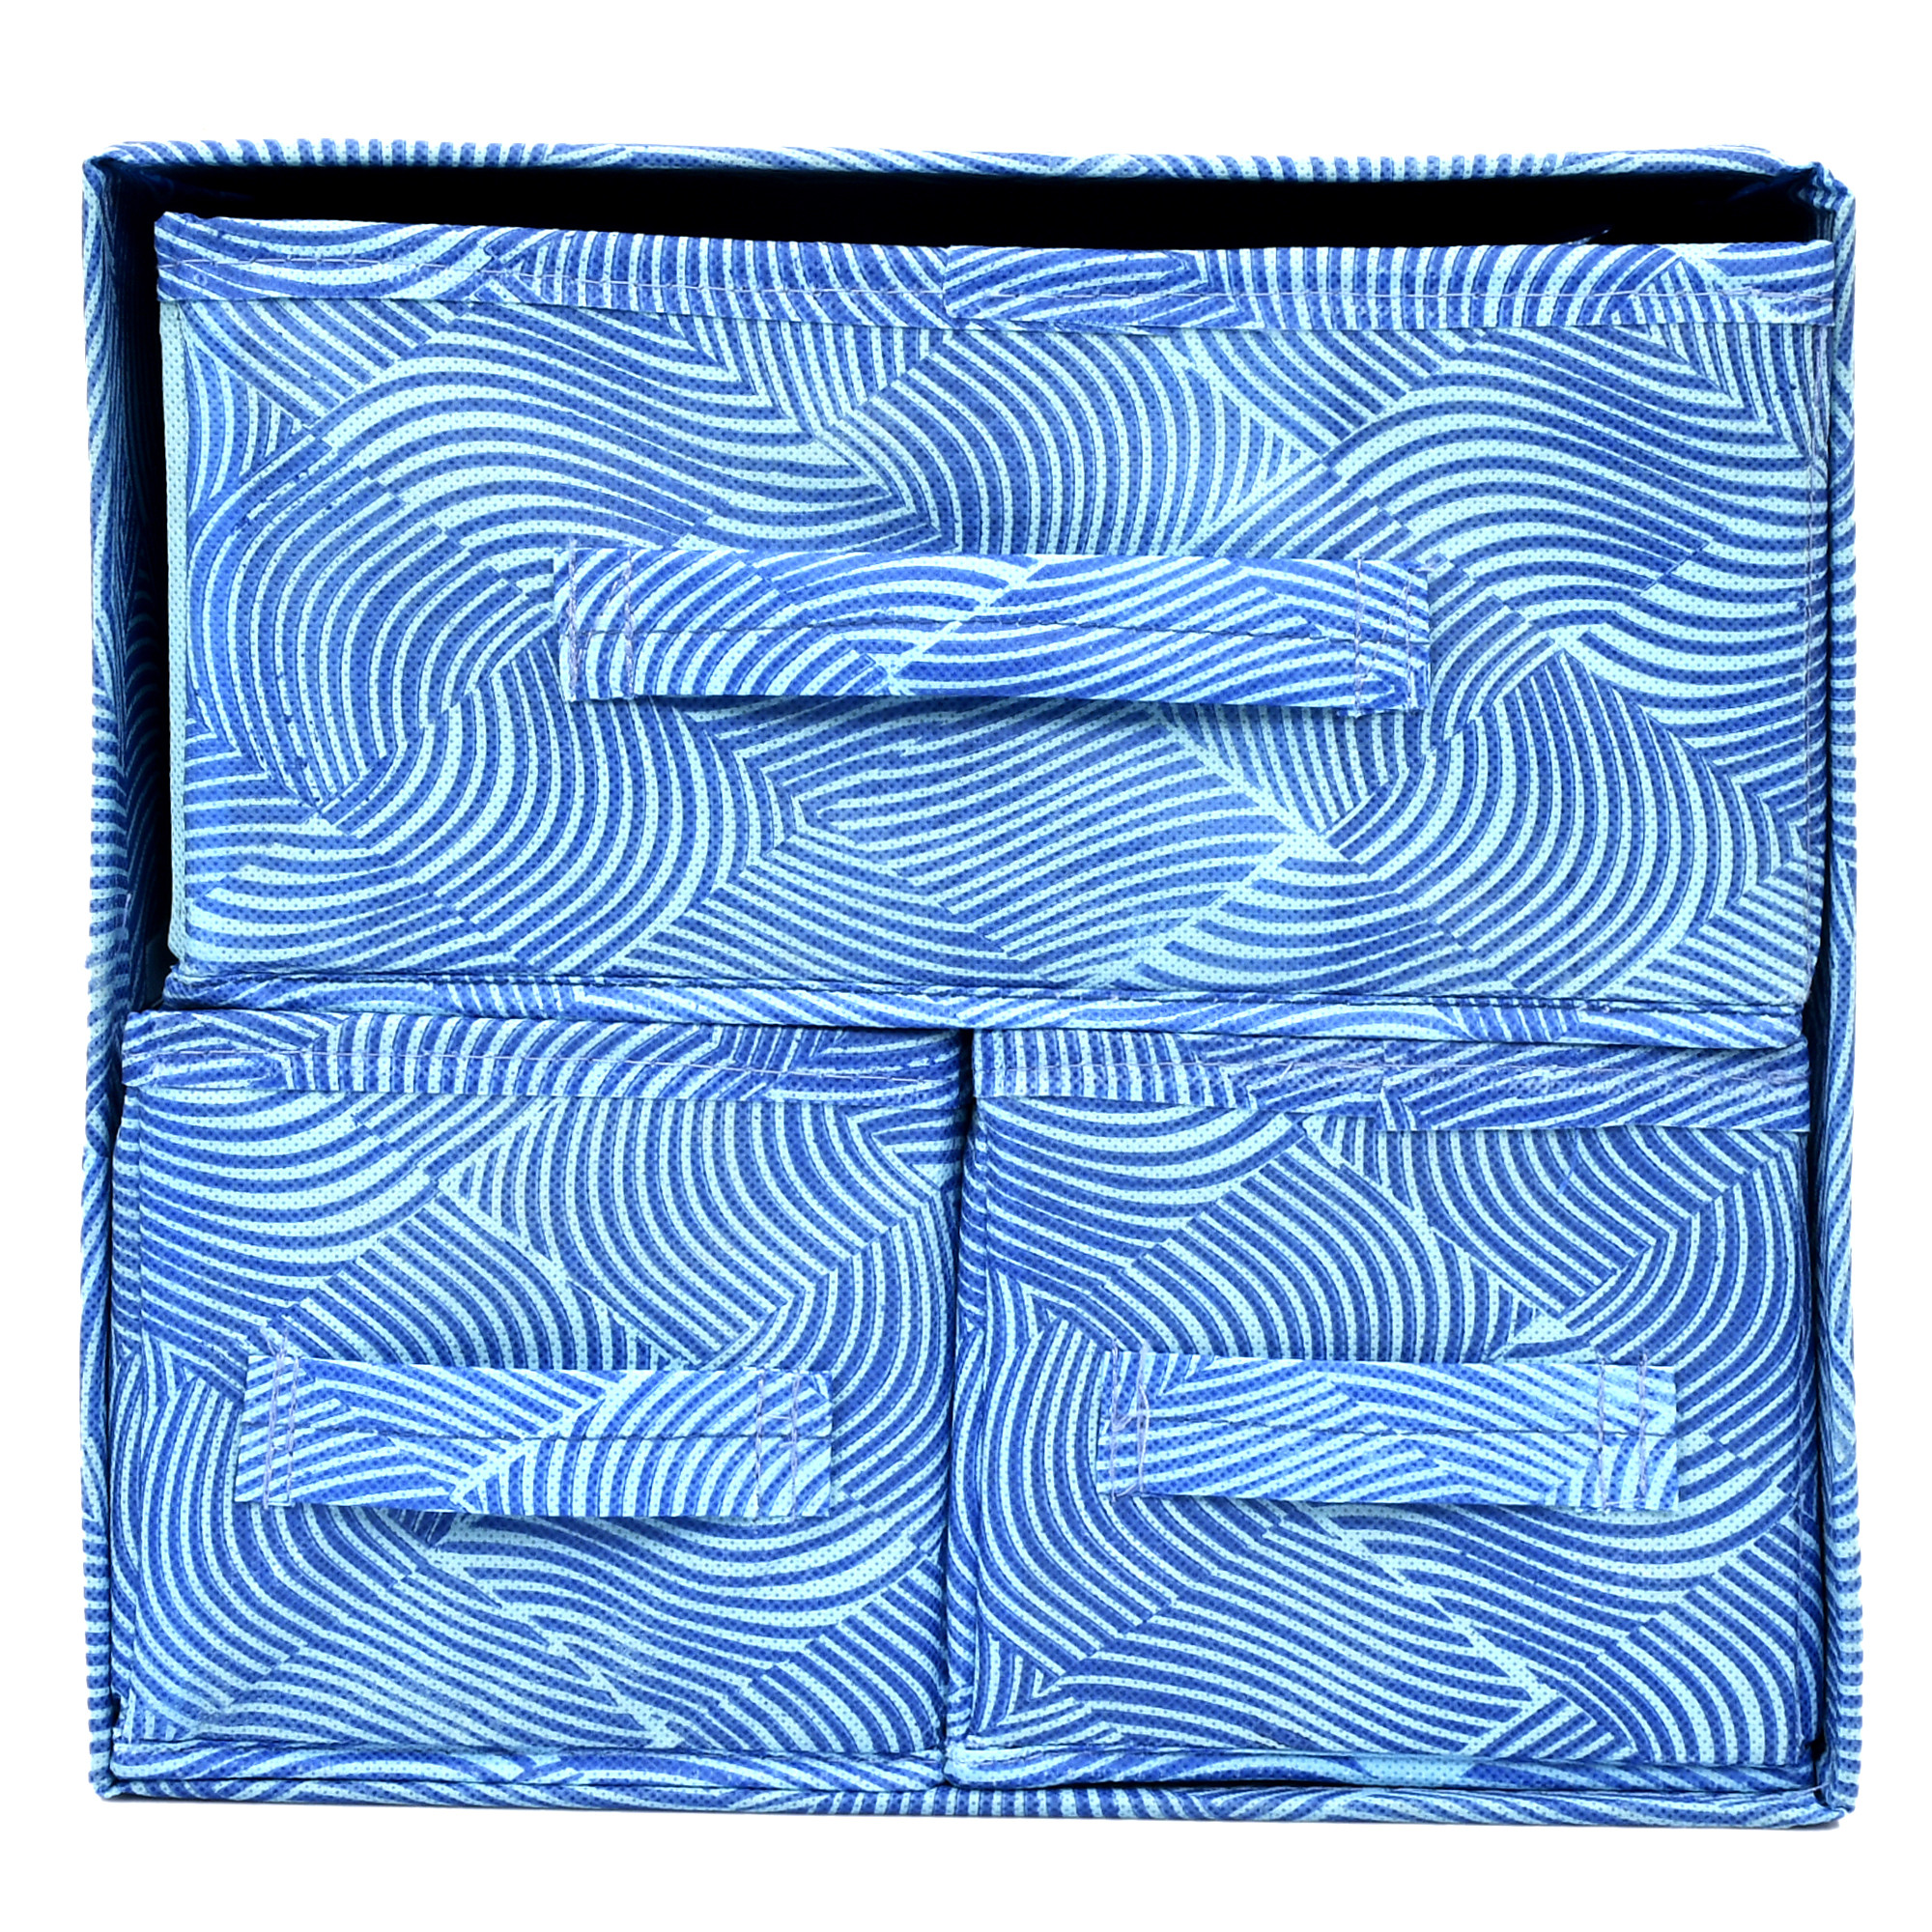 Kuber Industries Leheriya Print 2 Layer 3-Drawer Fabric Cube Foldable Storage Organizer Box, Dressing Organizer,Jewellery organizer (Set Of 2, Blue)-KUBMART2145